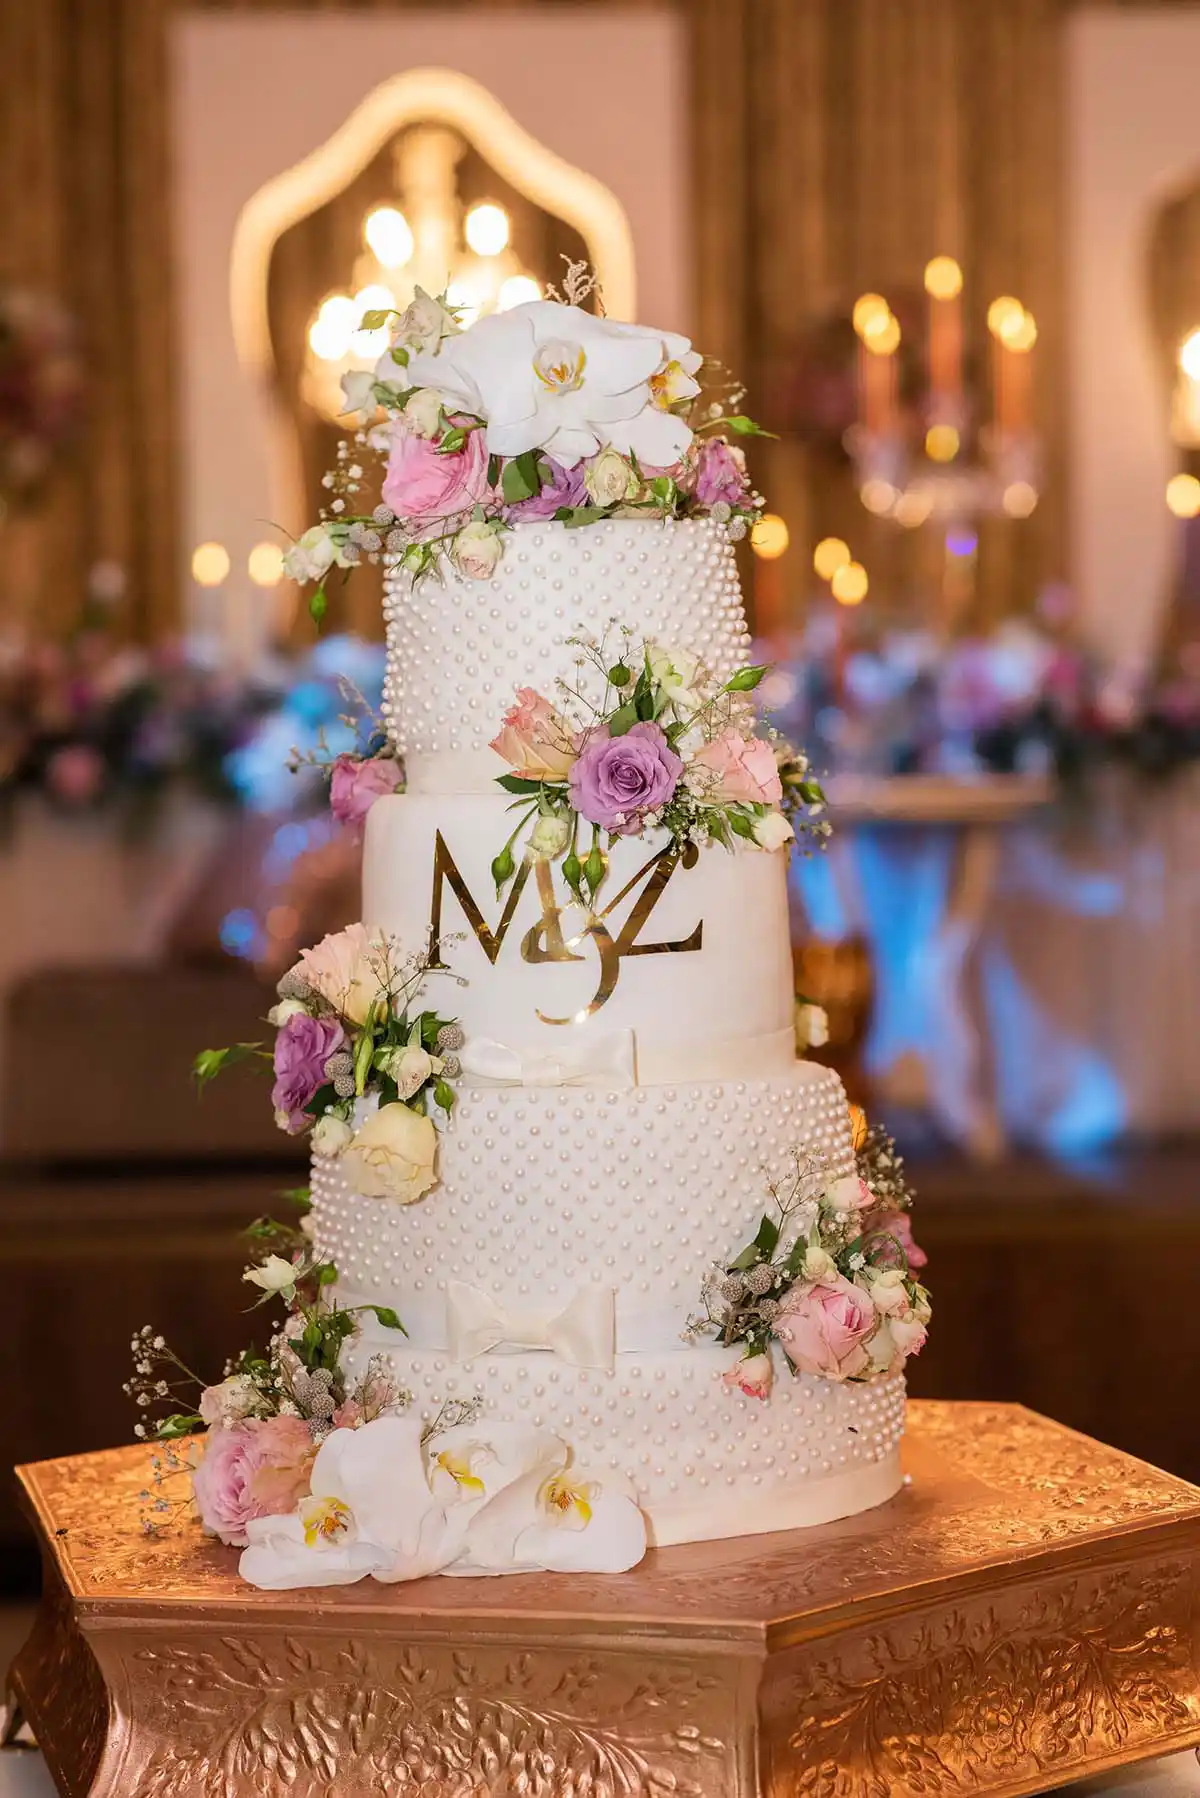 Wedding cake four tier white with texture details bloemfontien wedding photographer